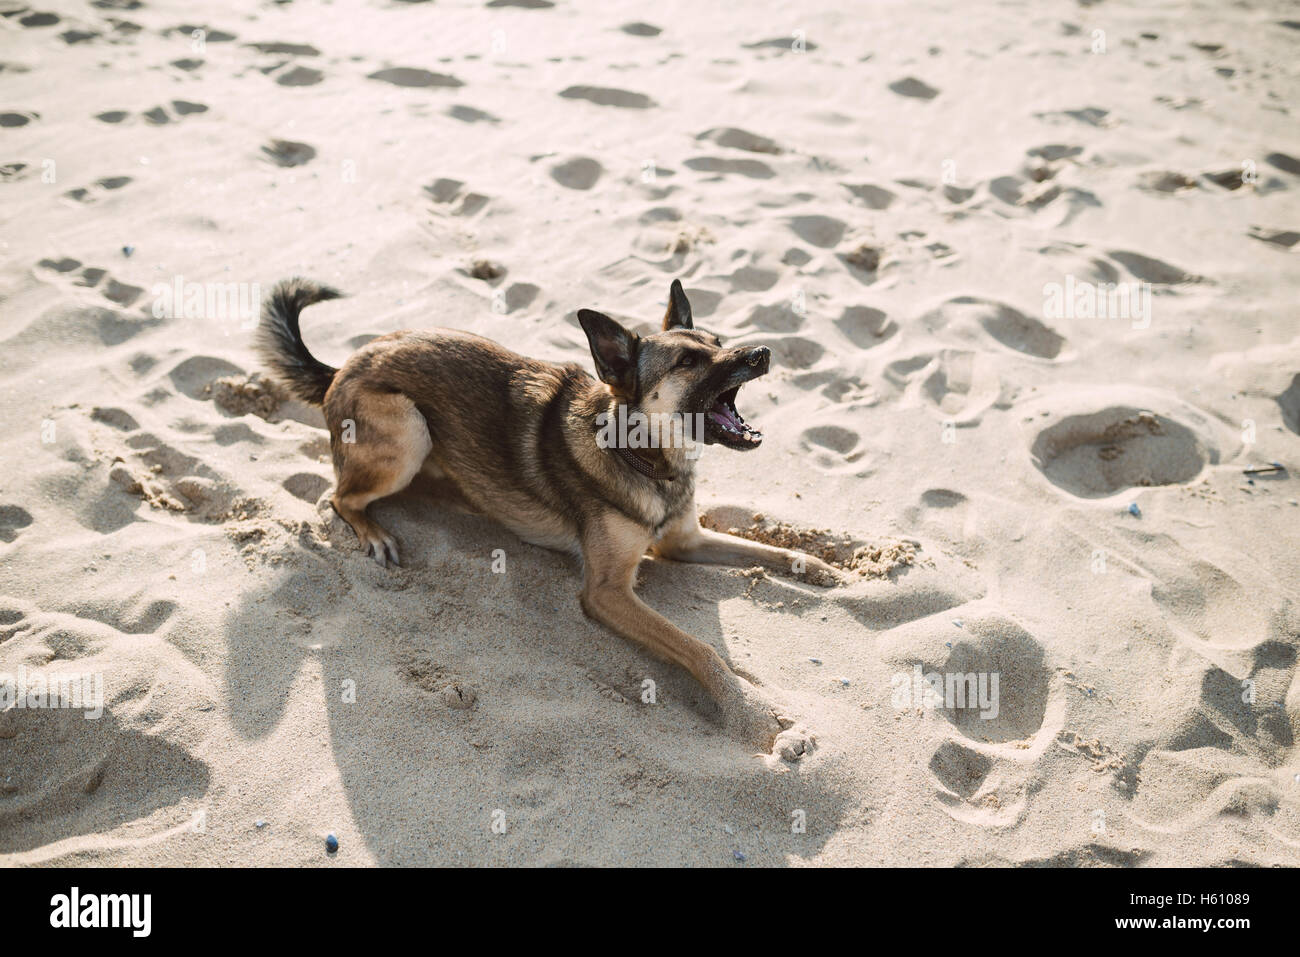 German shepherd dog playing on the beach. Dog is yawning. Stock Photo